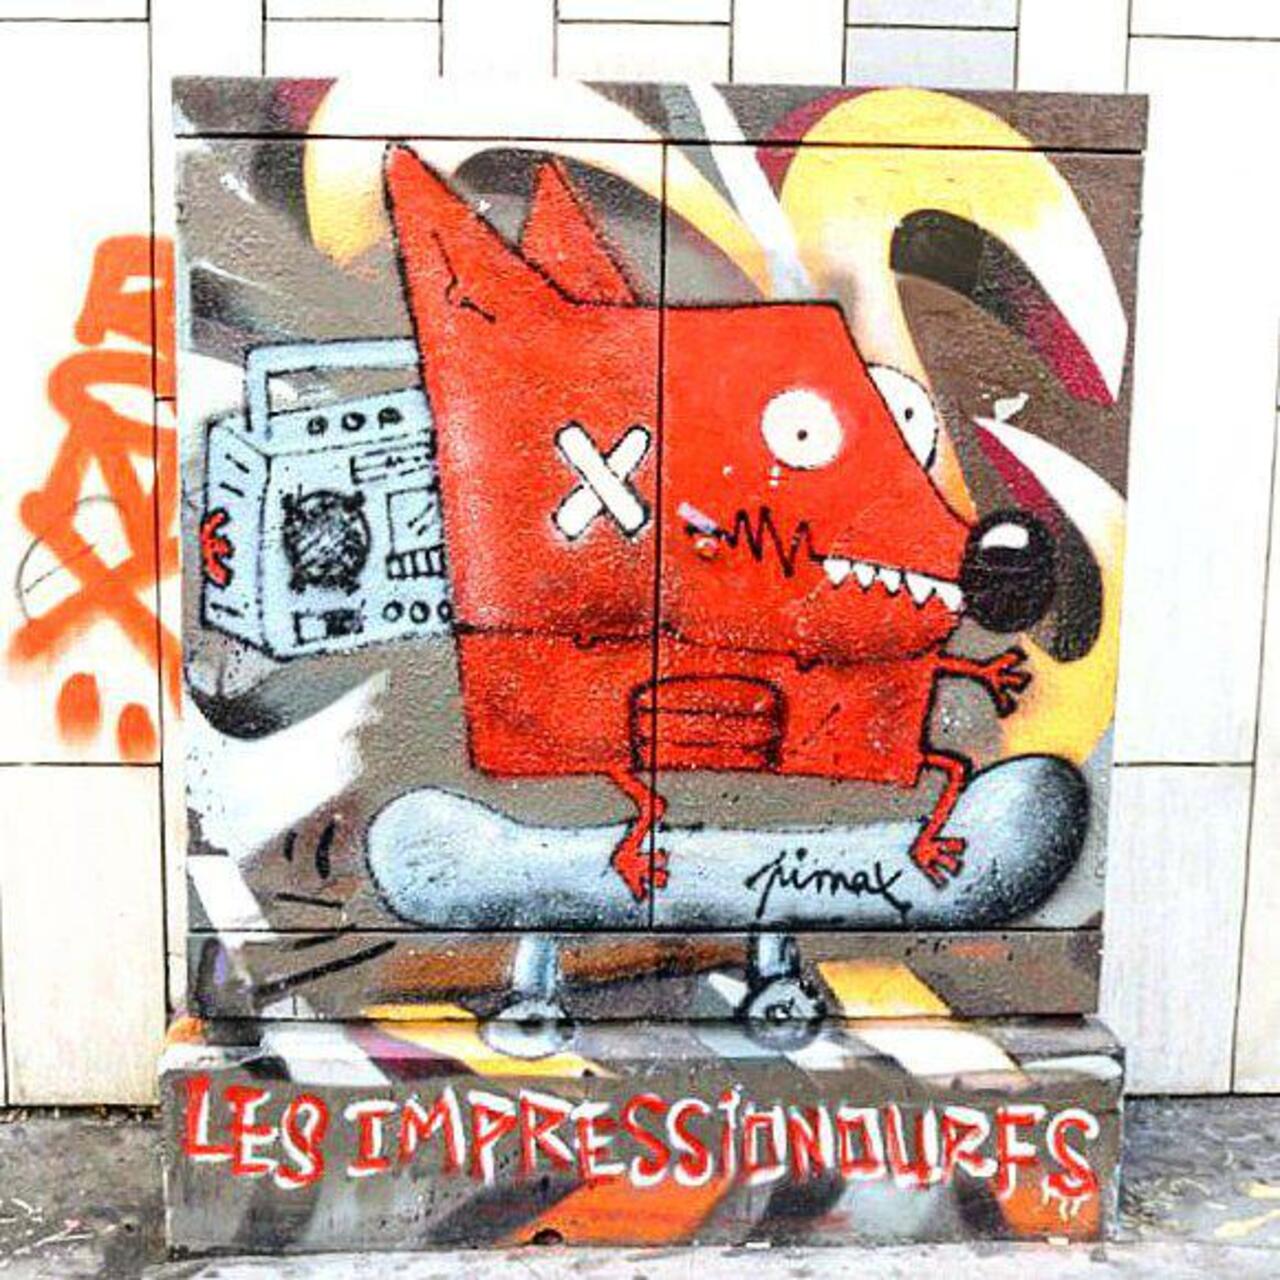 #Paris #graffiti photo by @jpoesse http://ift.tt/1PCypzi #StreetArt https://t.co/nxL9xqazRI